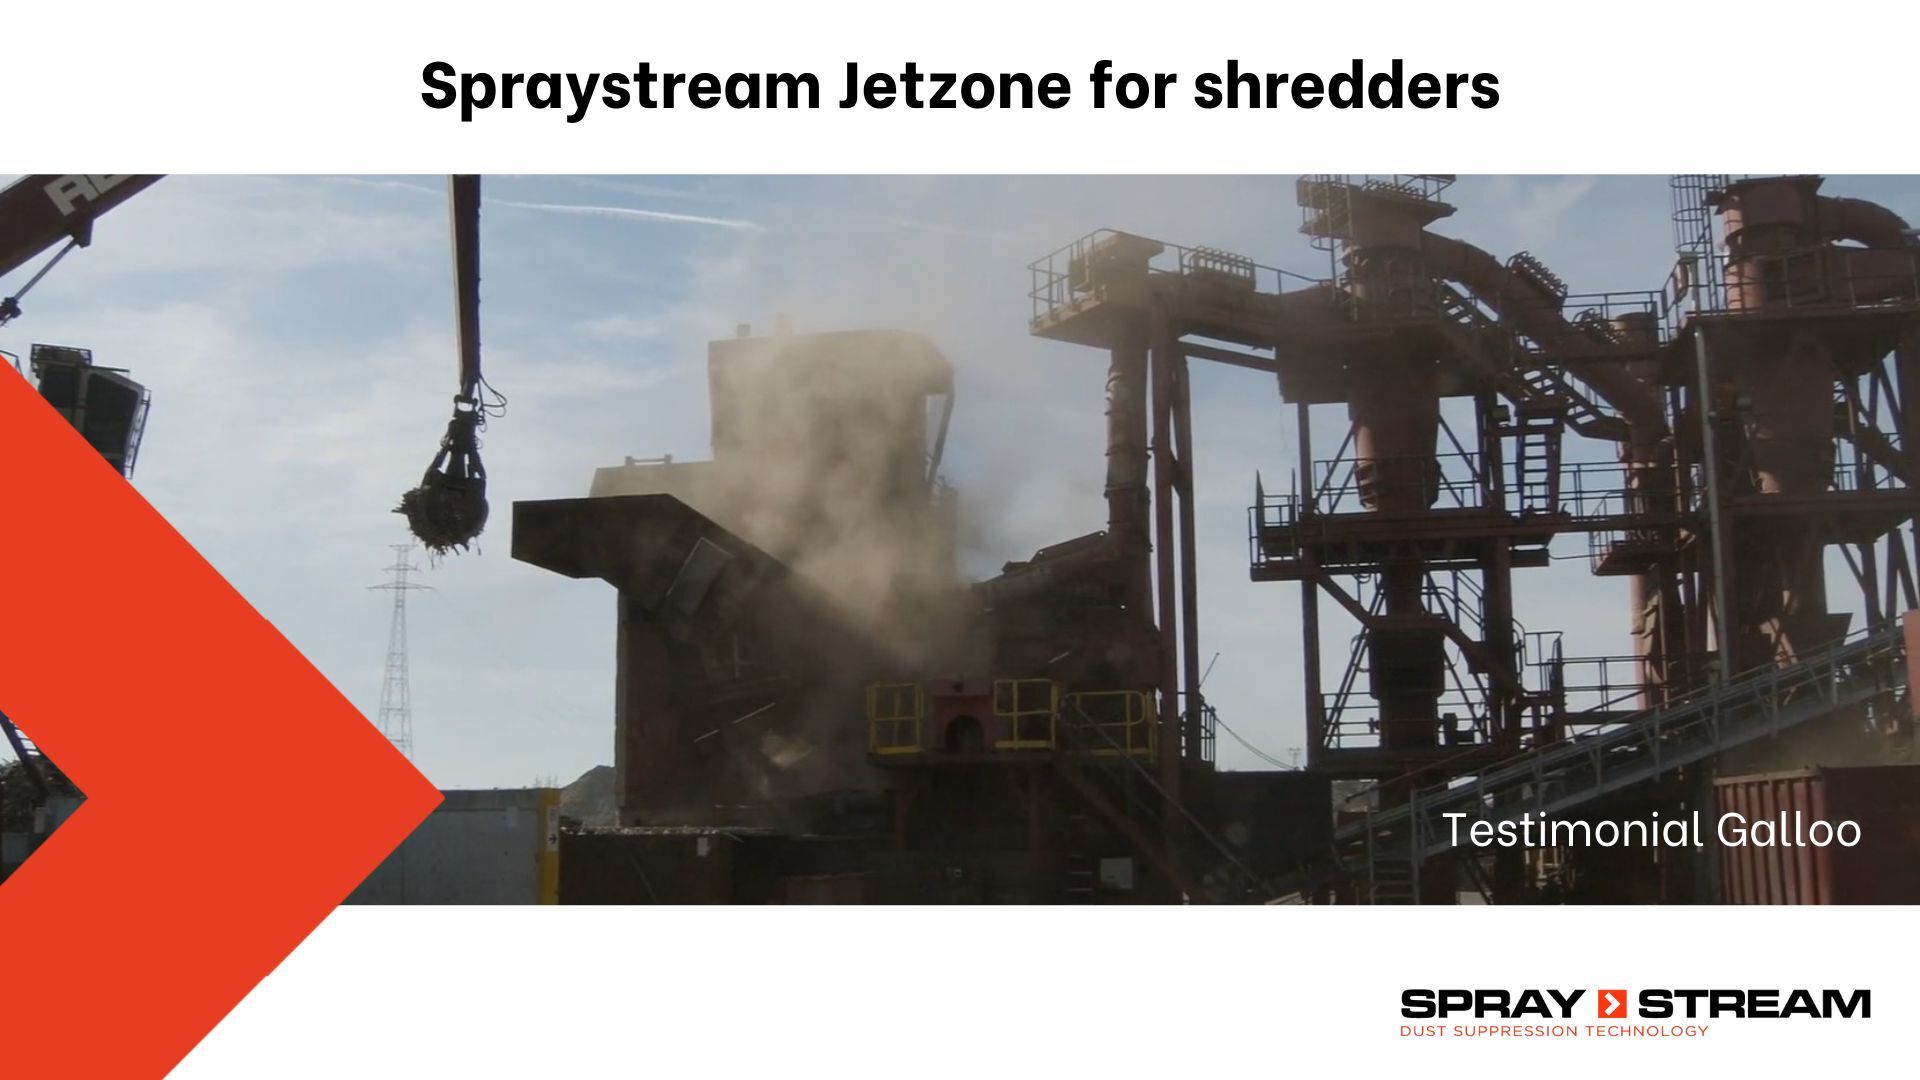 Spraystream Jetzone testimonial Galloo